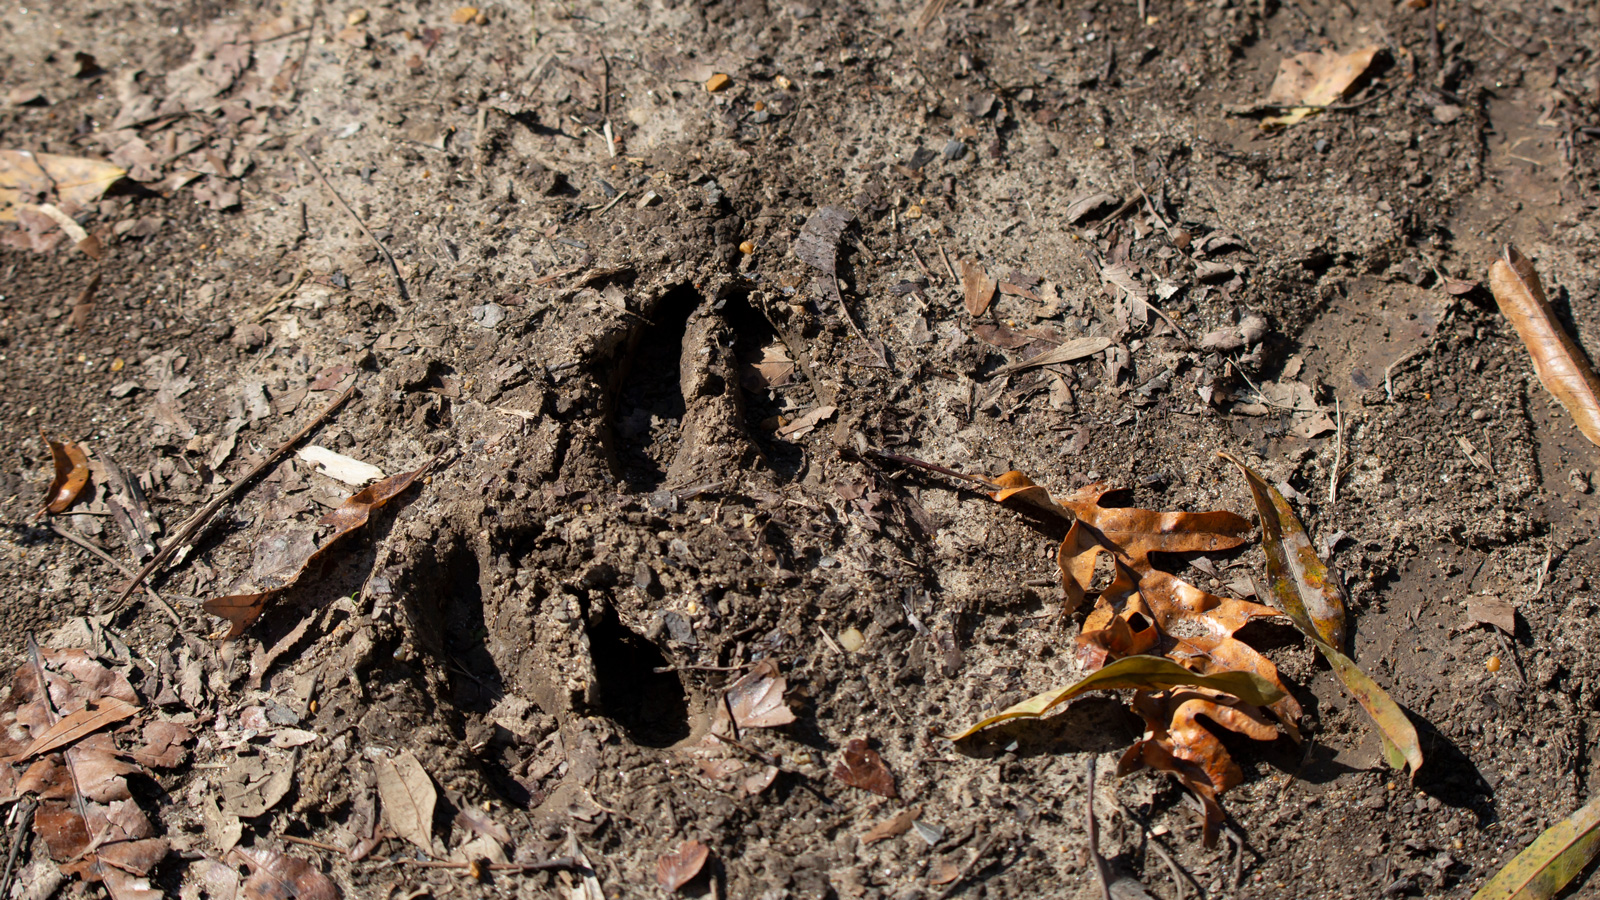 White-tailed deer tracks in dirt